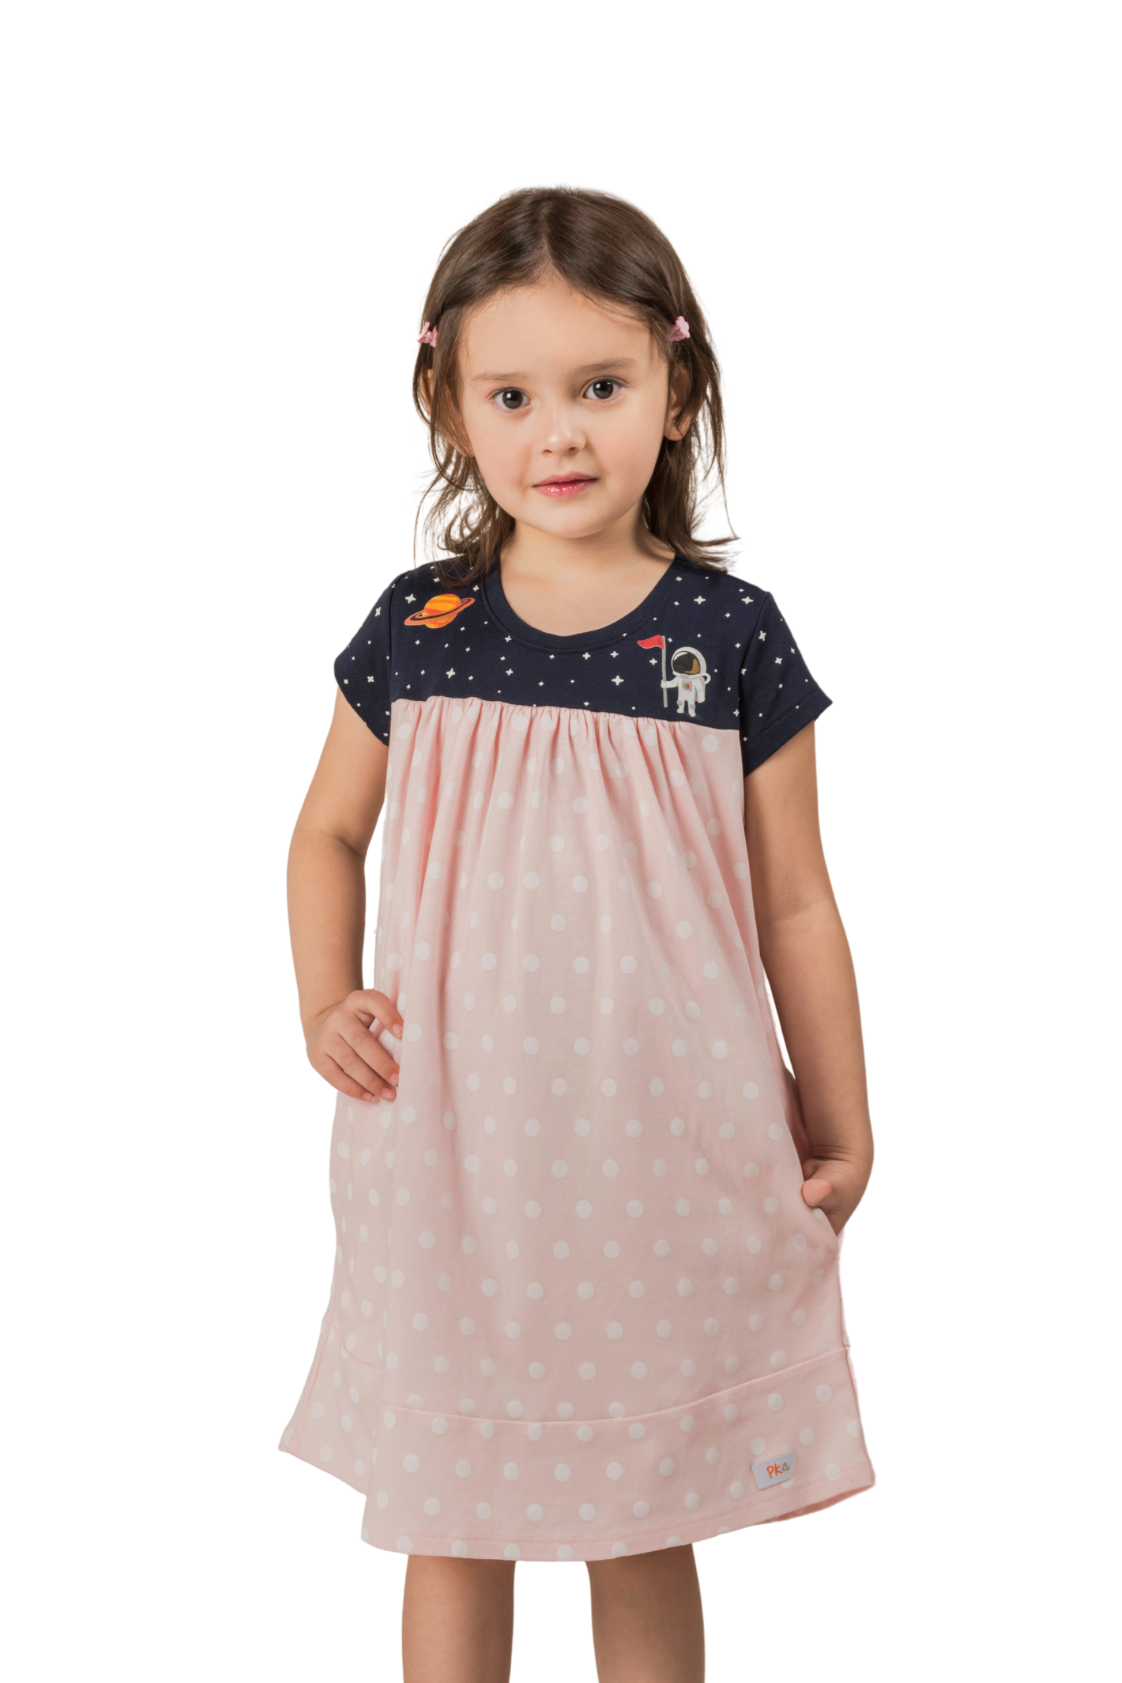 Prisma Kiddos- Space dress with pockets, girl dress, kids clothing boutique, Peruvian Pima cotton, conscious fashion